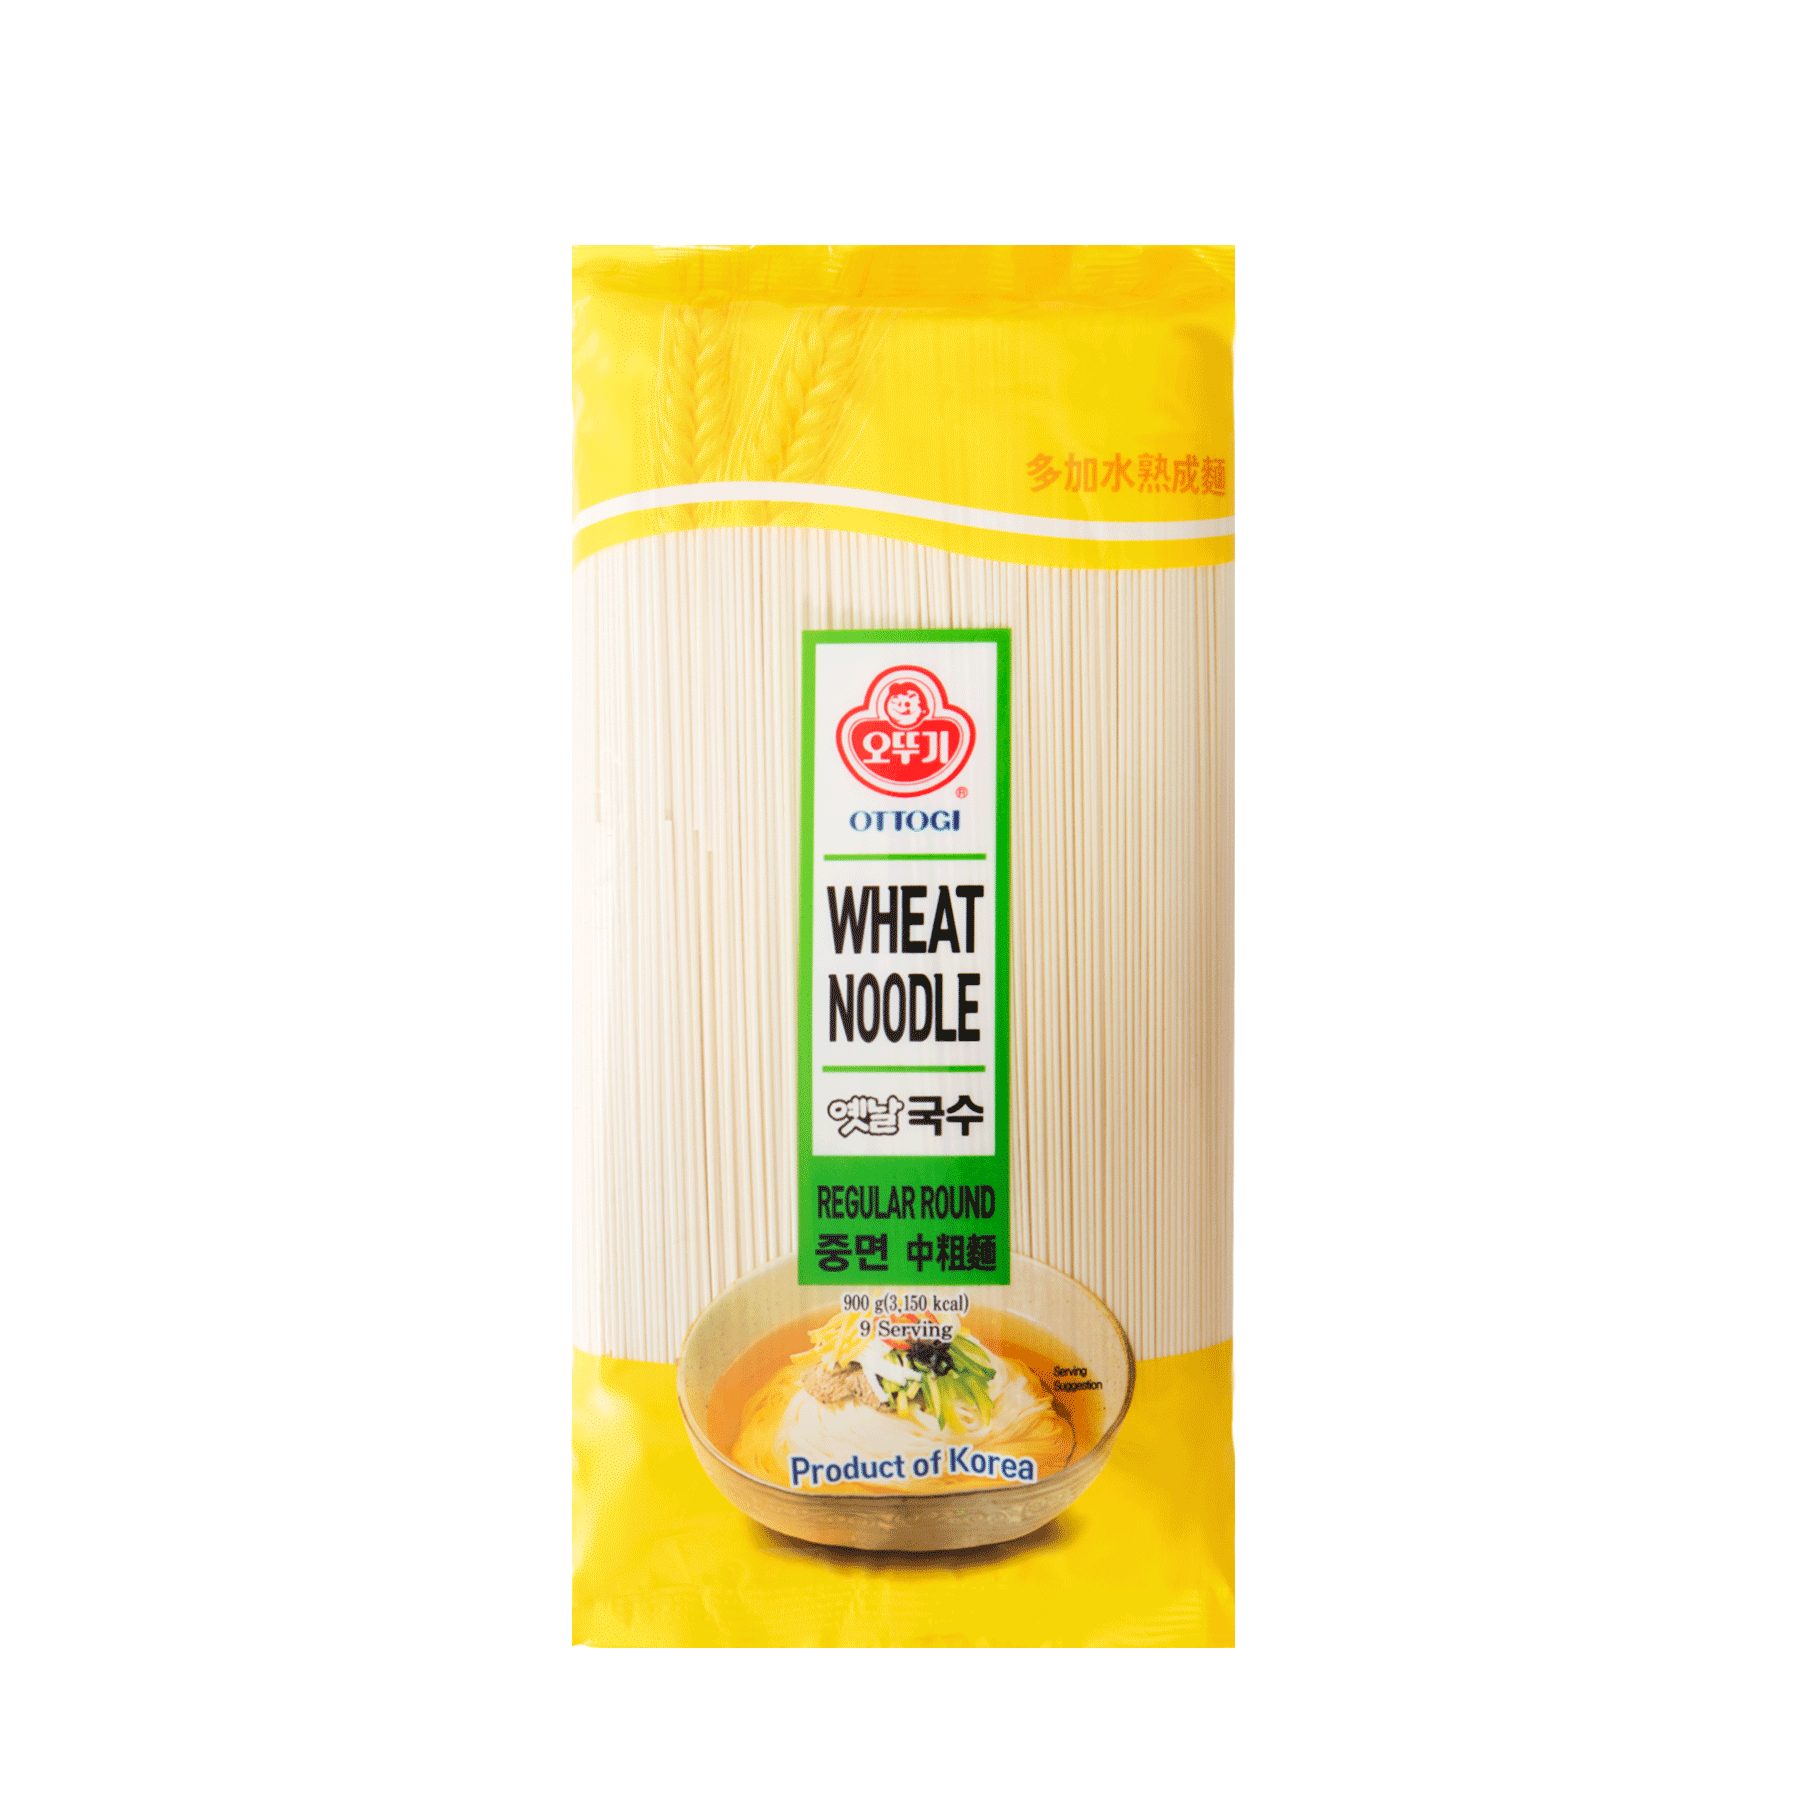 Wheat Noodle (Regular Round) 900g